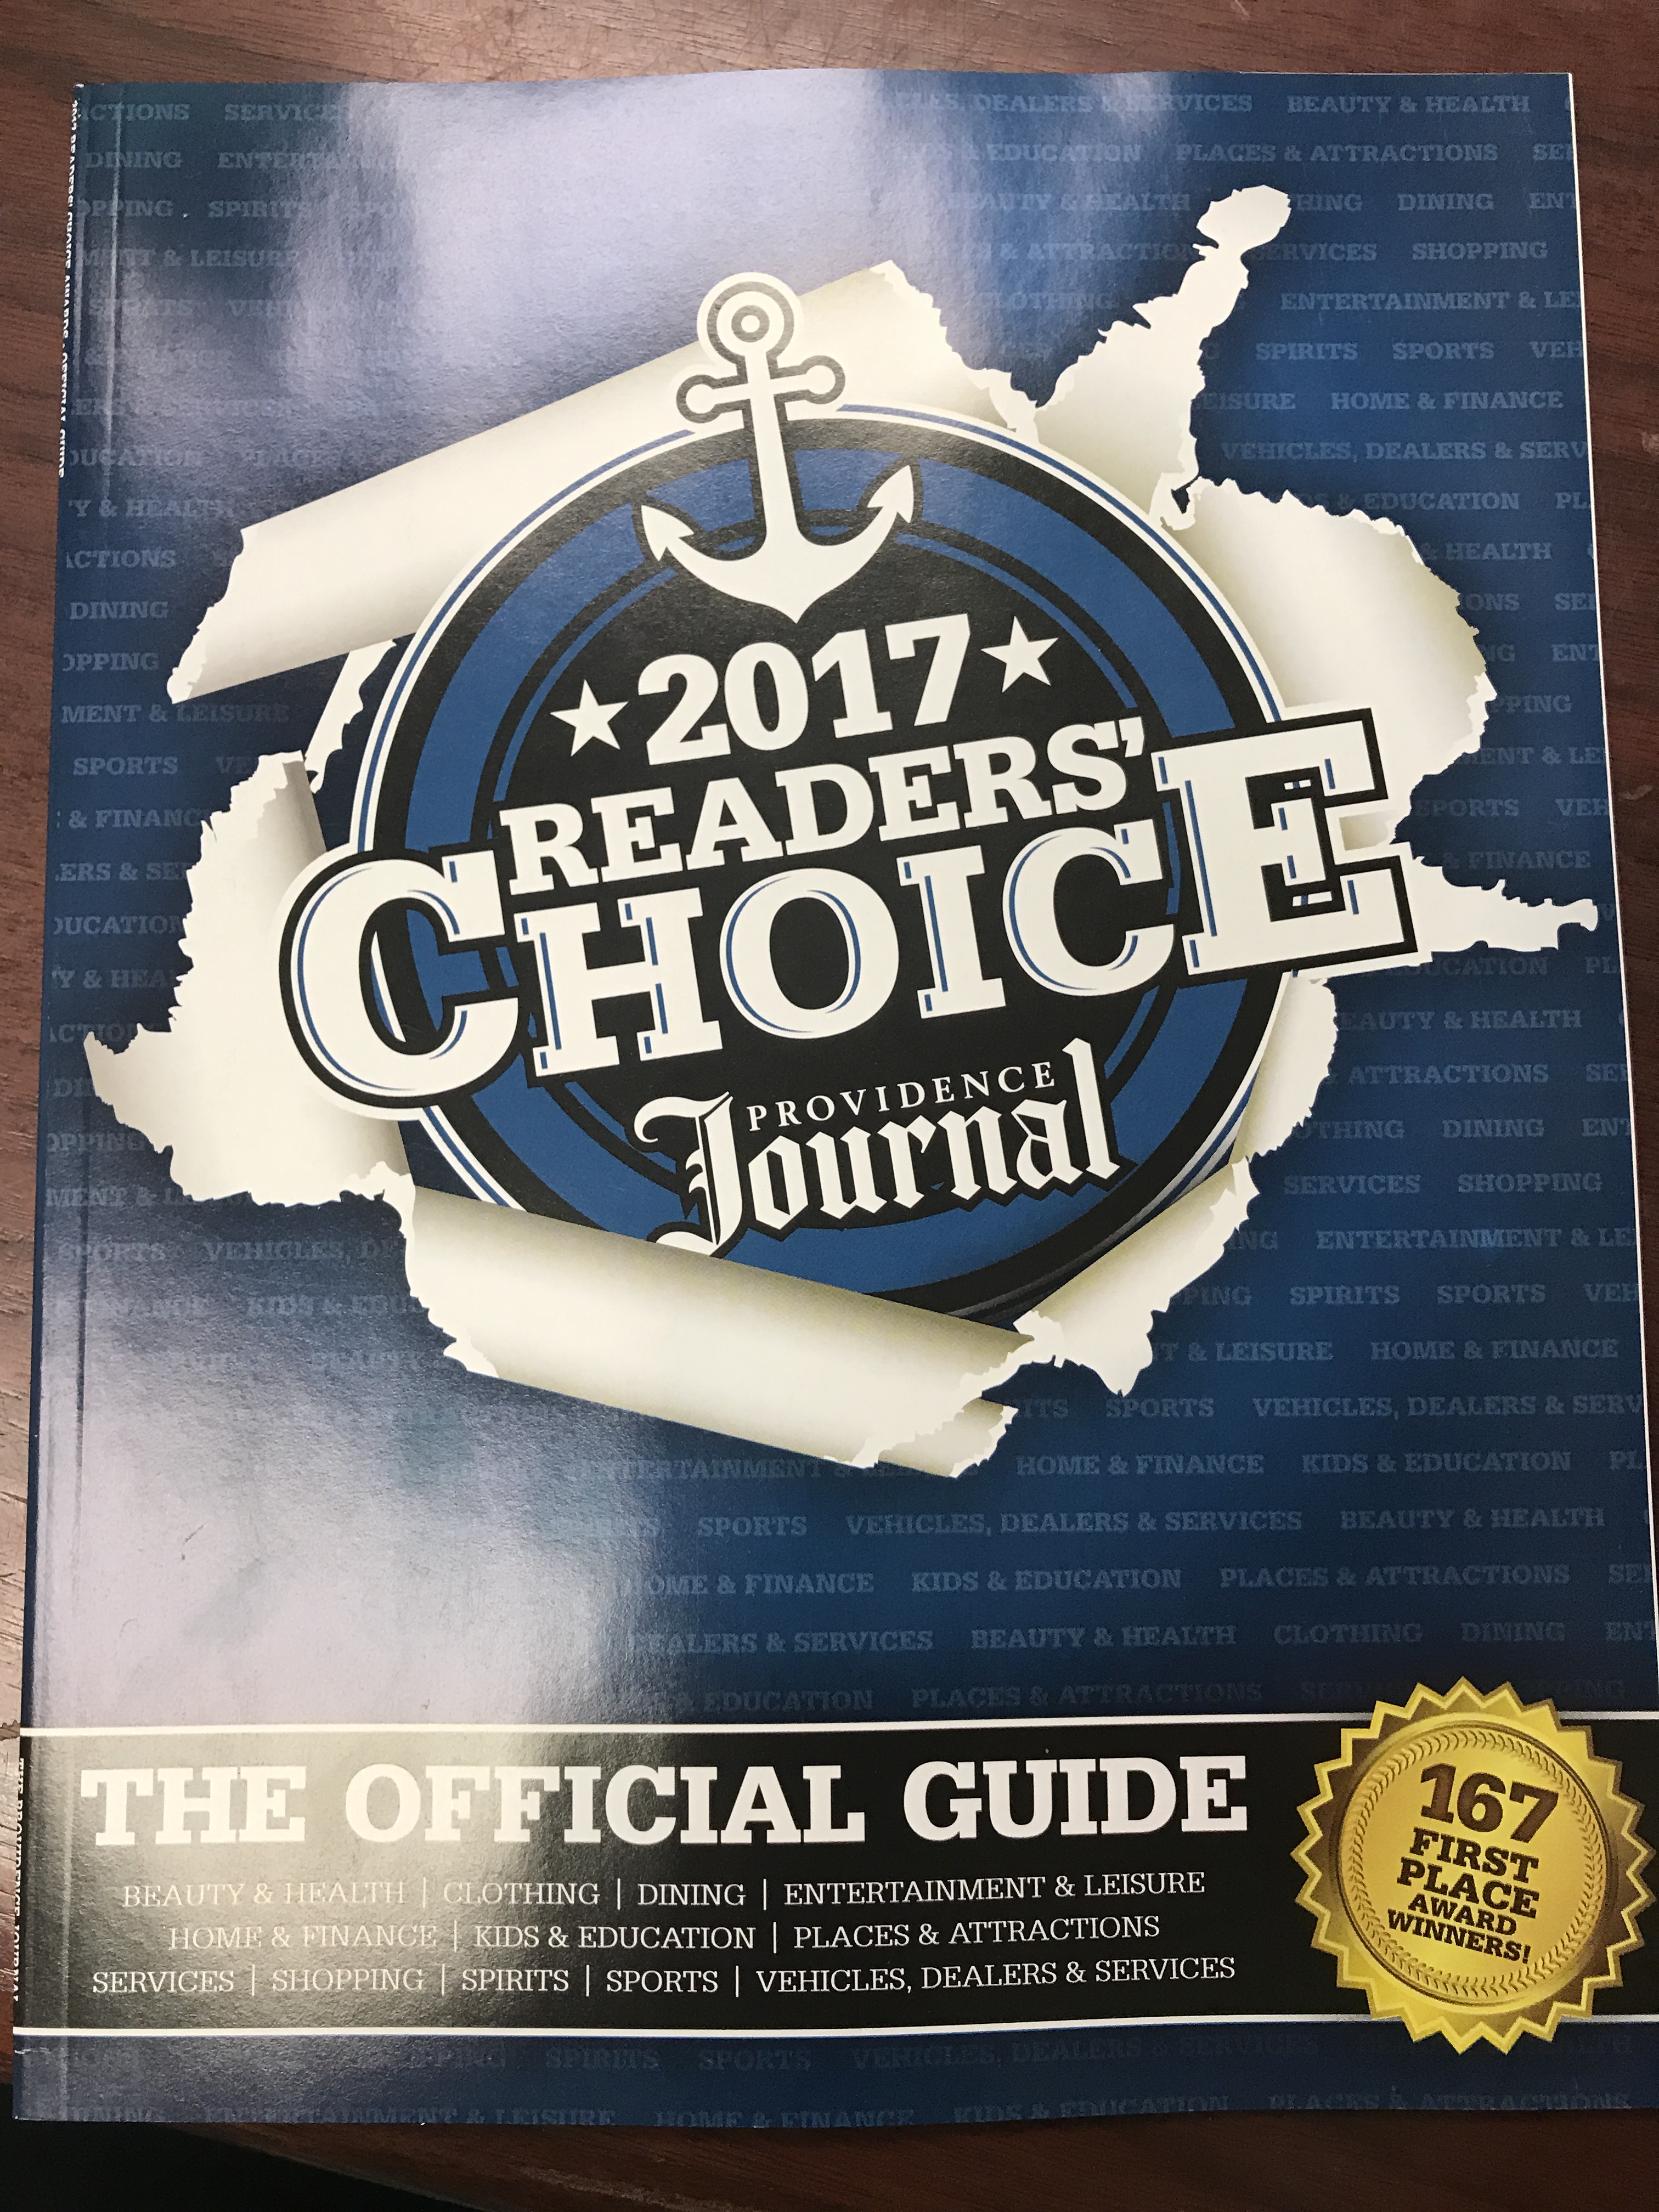 Readers’ Choice Awards!